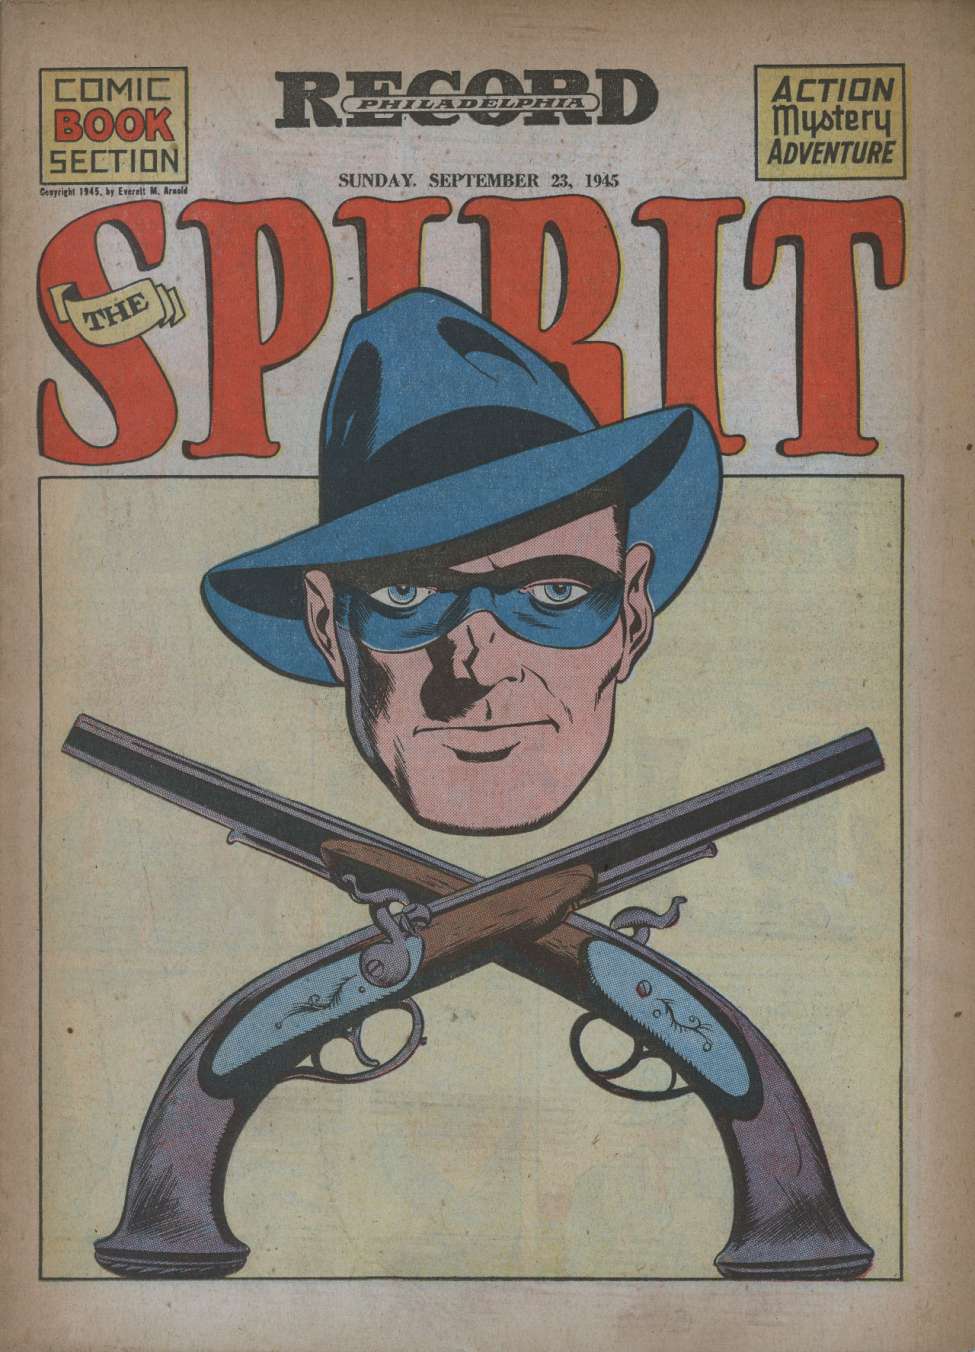 Comic Book Cover For The Spirit (1945-09-23) - Philadelphia Record